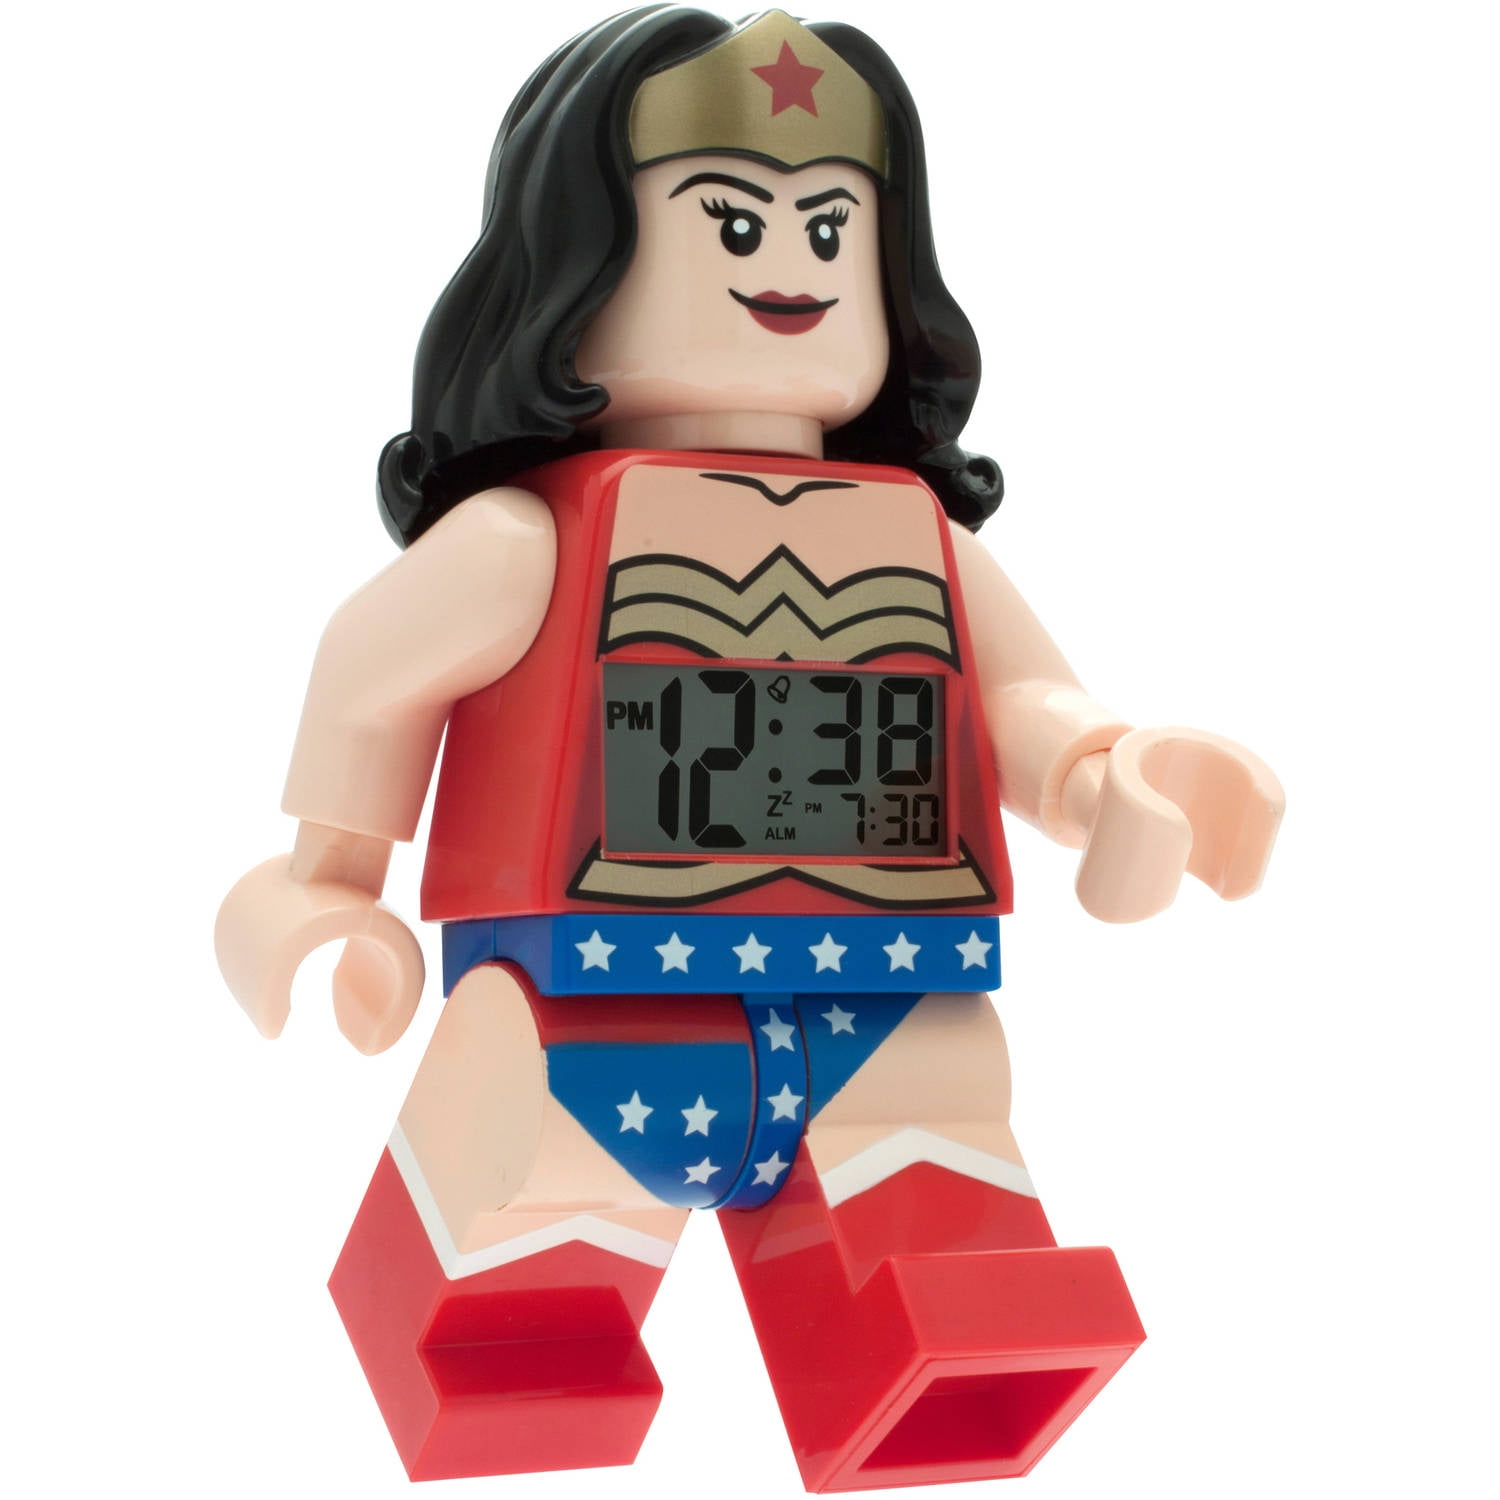 LEGO 9009877 DC Universe Wonder Woman Digital Alarm Clock for sale online 